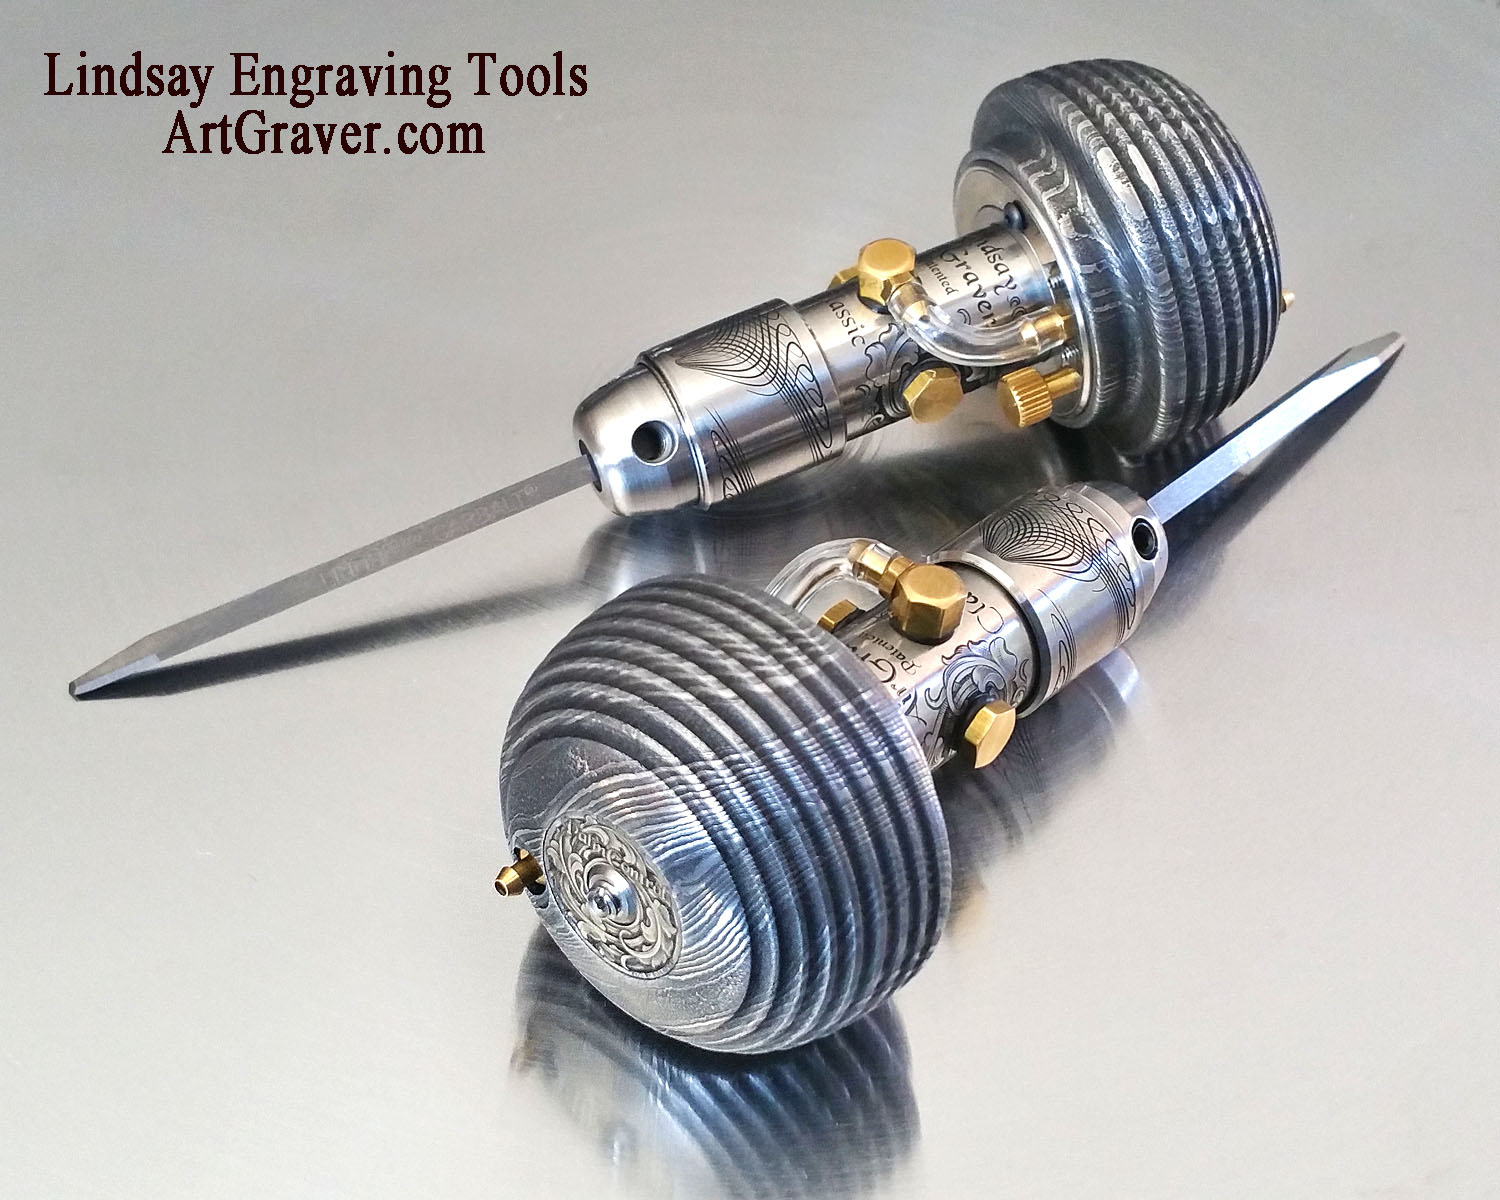 479 Metal Engraving Tools Stock Photos - Free & Royalty-Free Stock